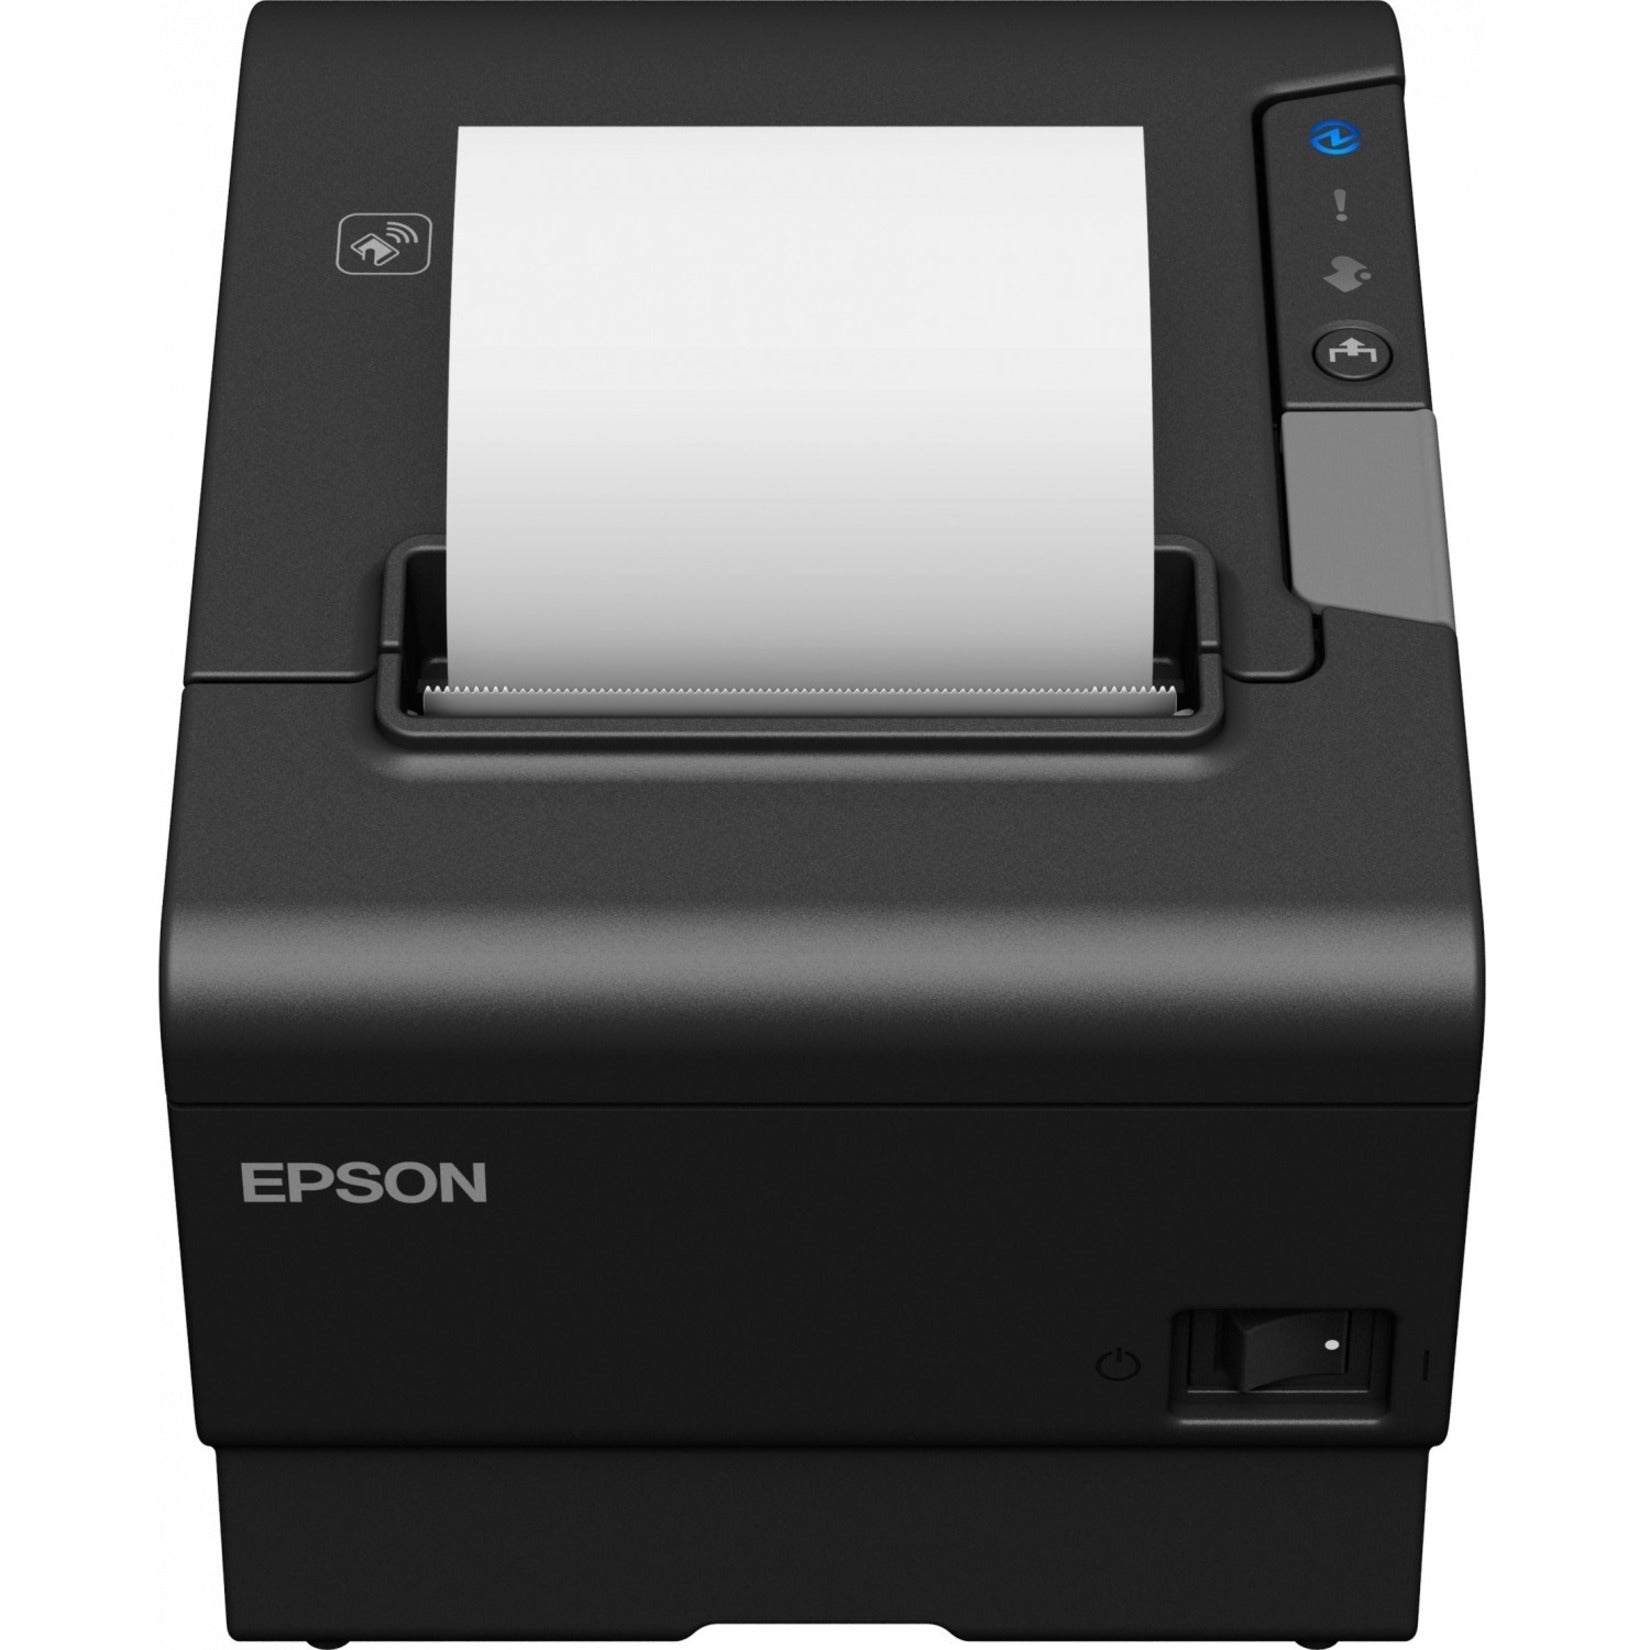 Epson OmniLink TM-T88VI Single-station Thermal Receipt Printer [Discontinued]